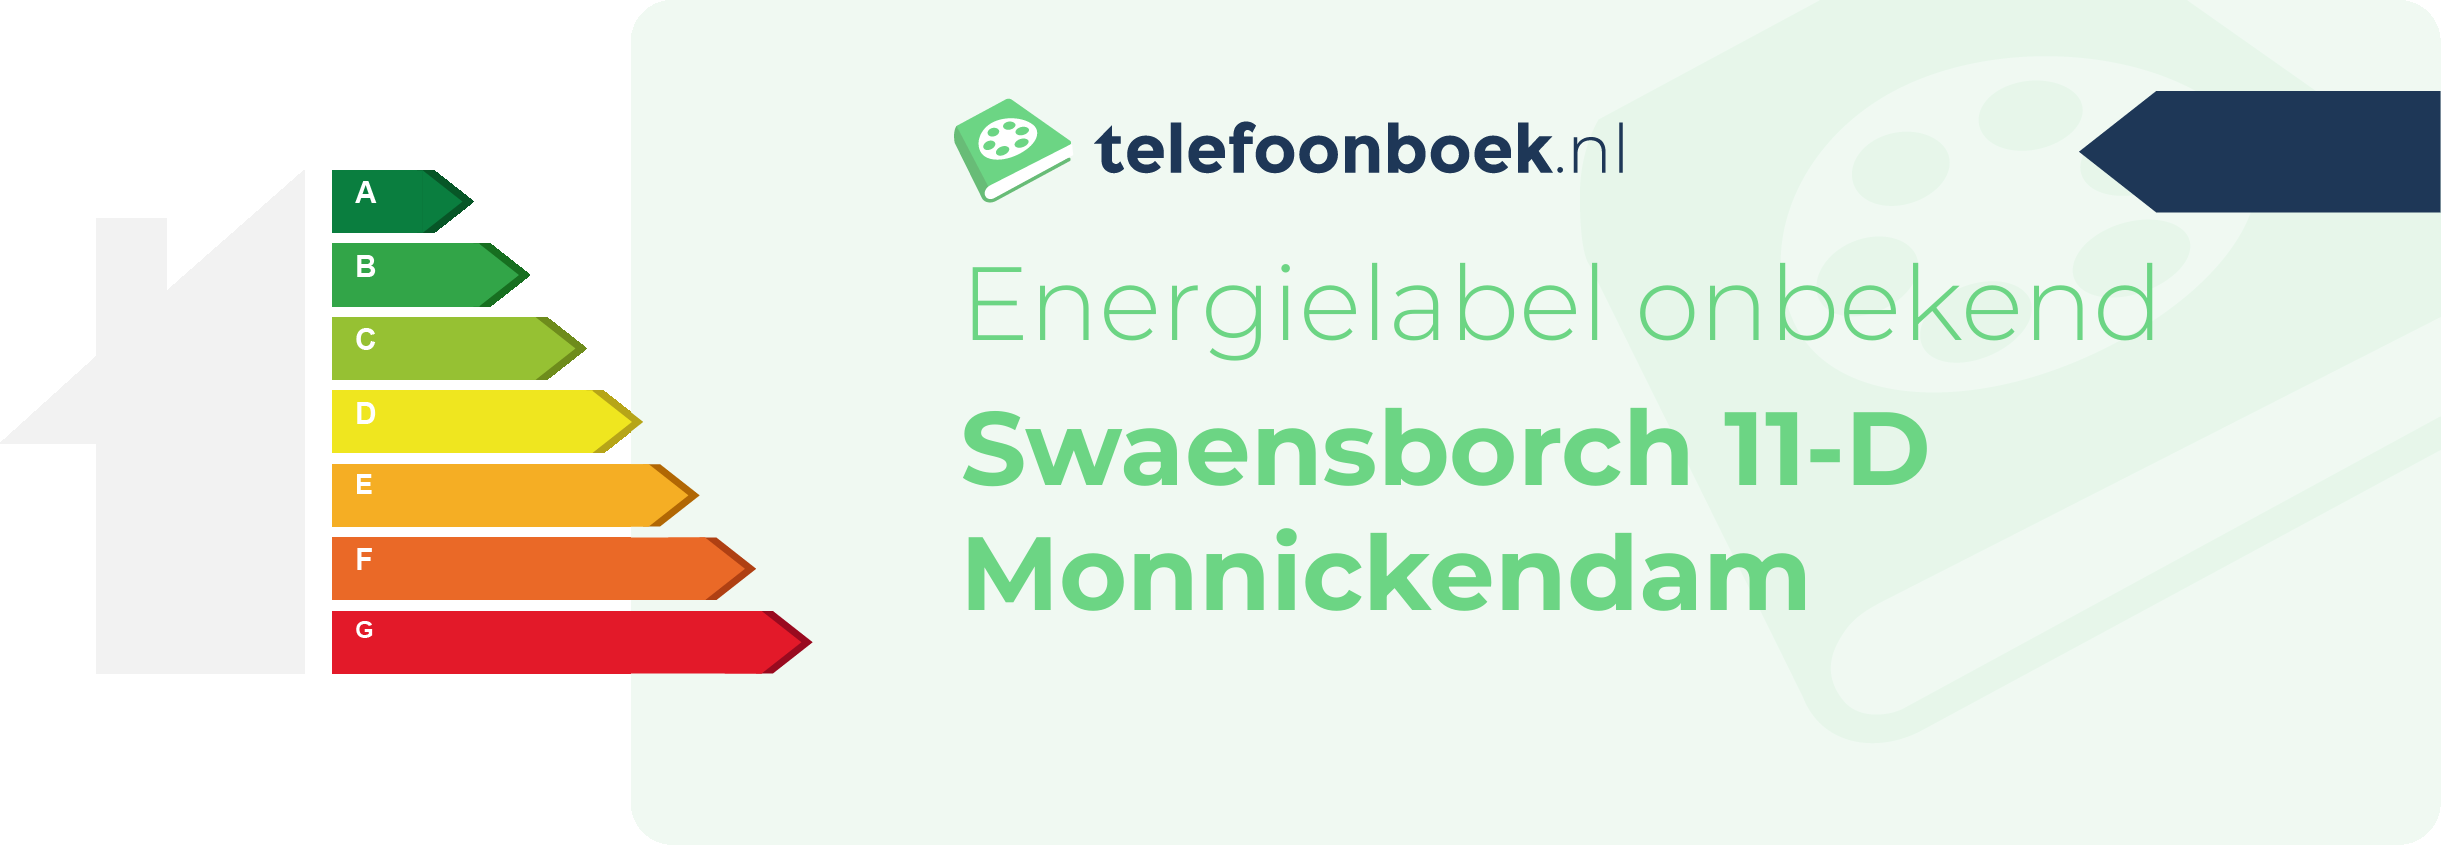 Energielabel Swaensborch 11-D Monnickendam